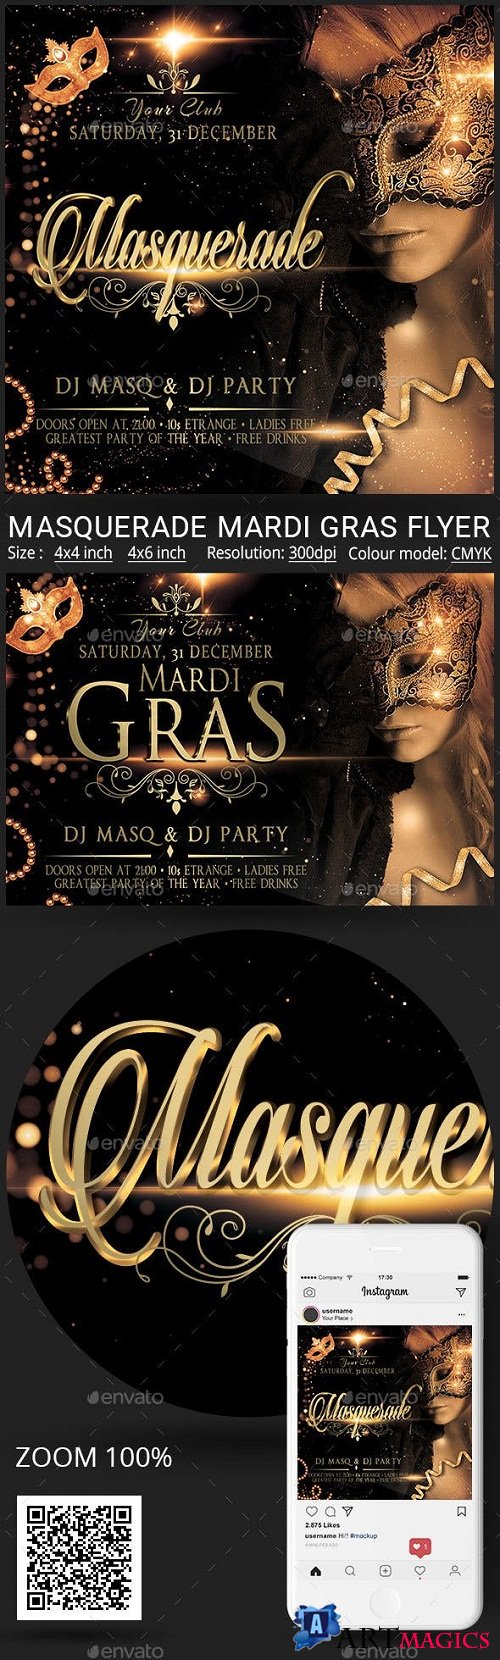 Masquerade Mardi Gras Party Flyer 23088740 - 3365455